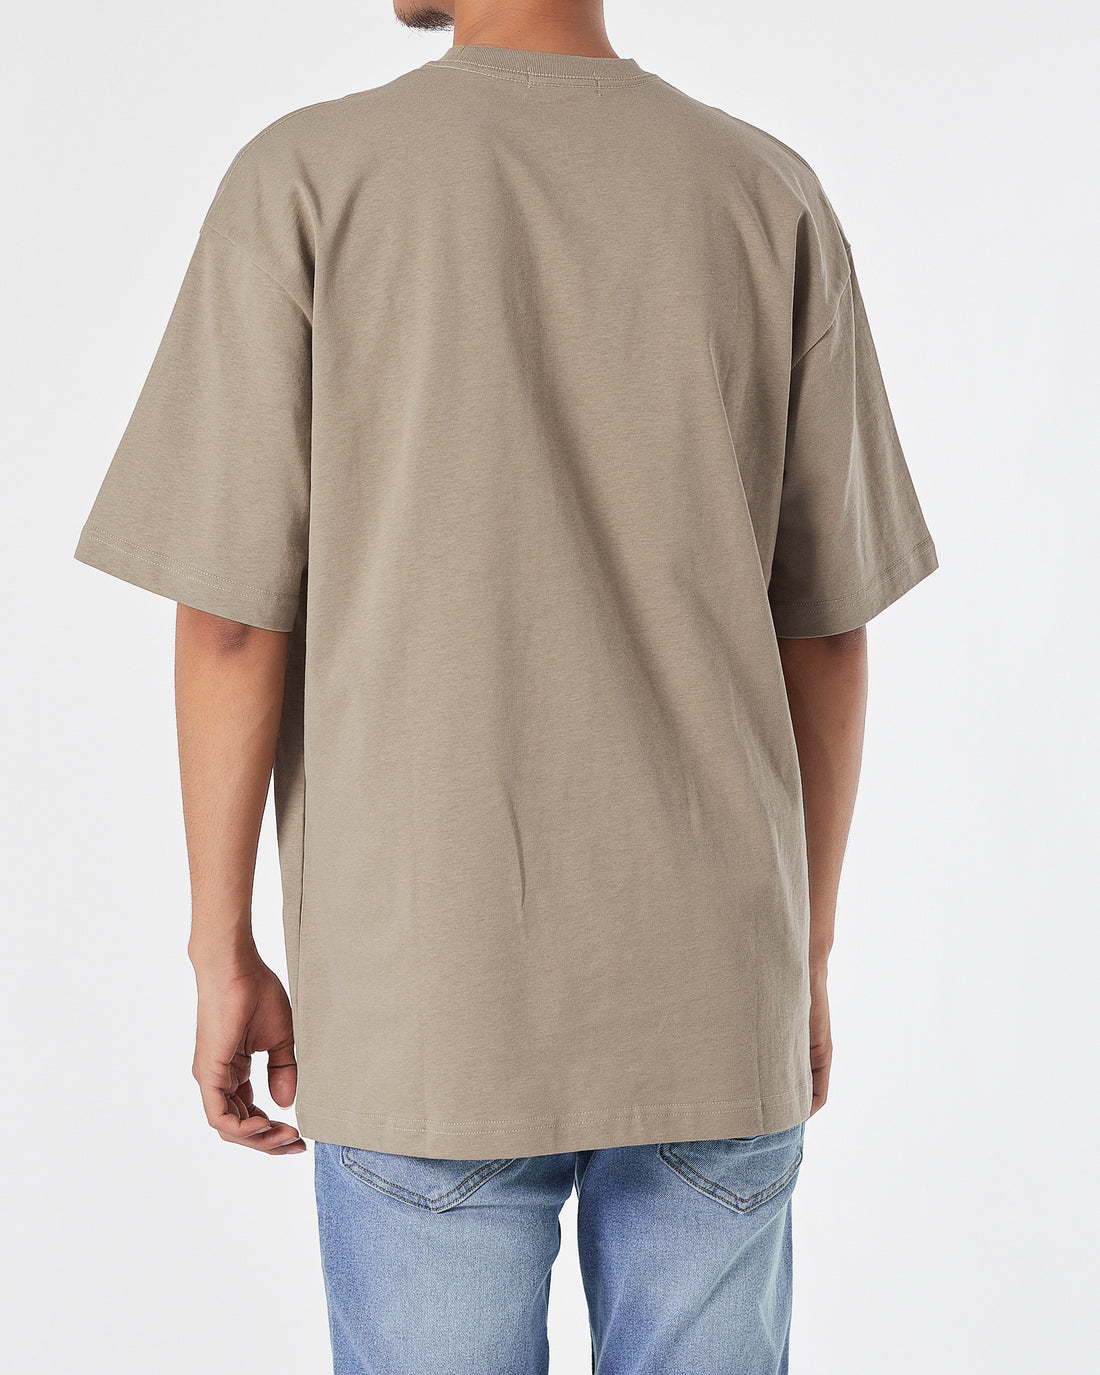 CEL Logo Printed Men Brown T-Shirt 17.90